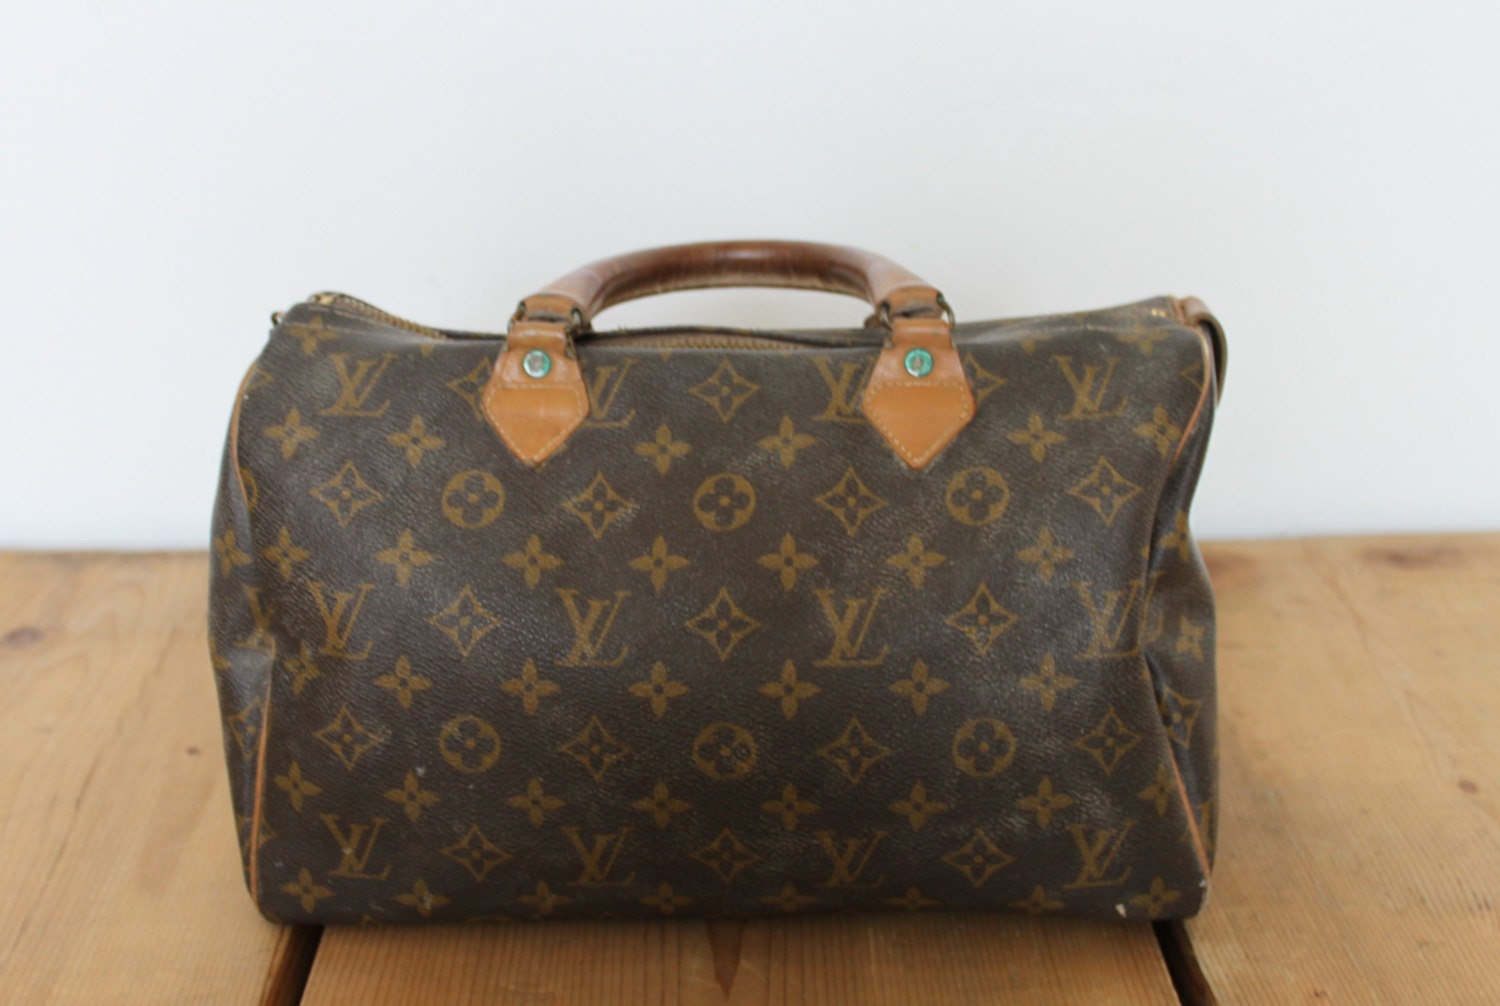 Vintage 1970s Louis Vuitton Handbag by VintageRosemond on Etsy